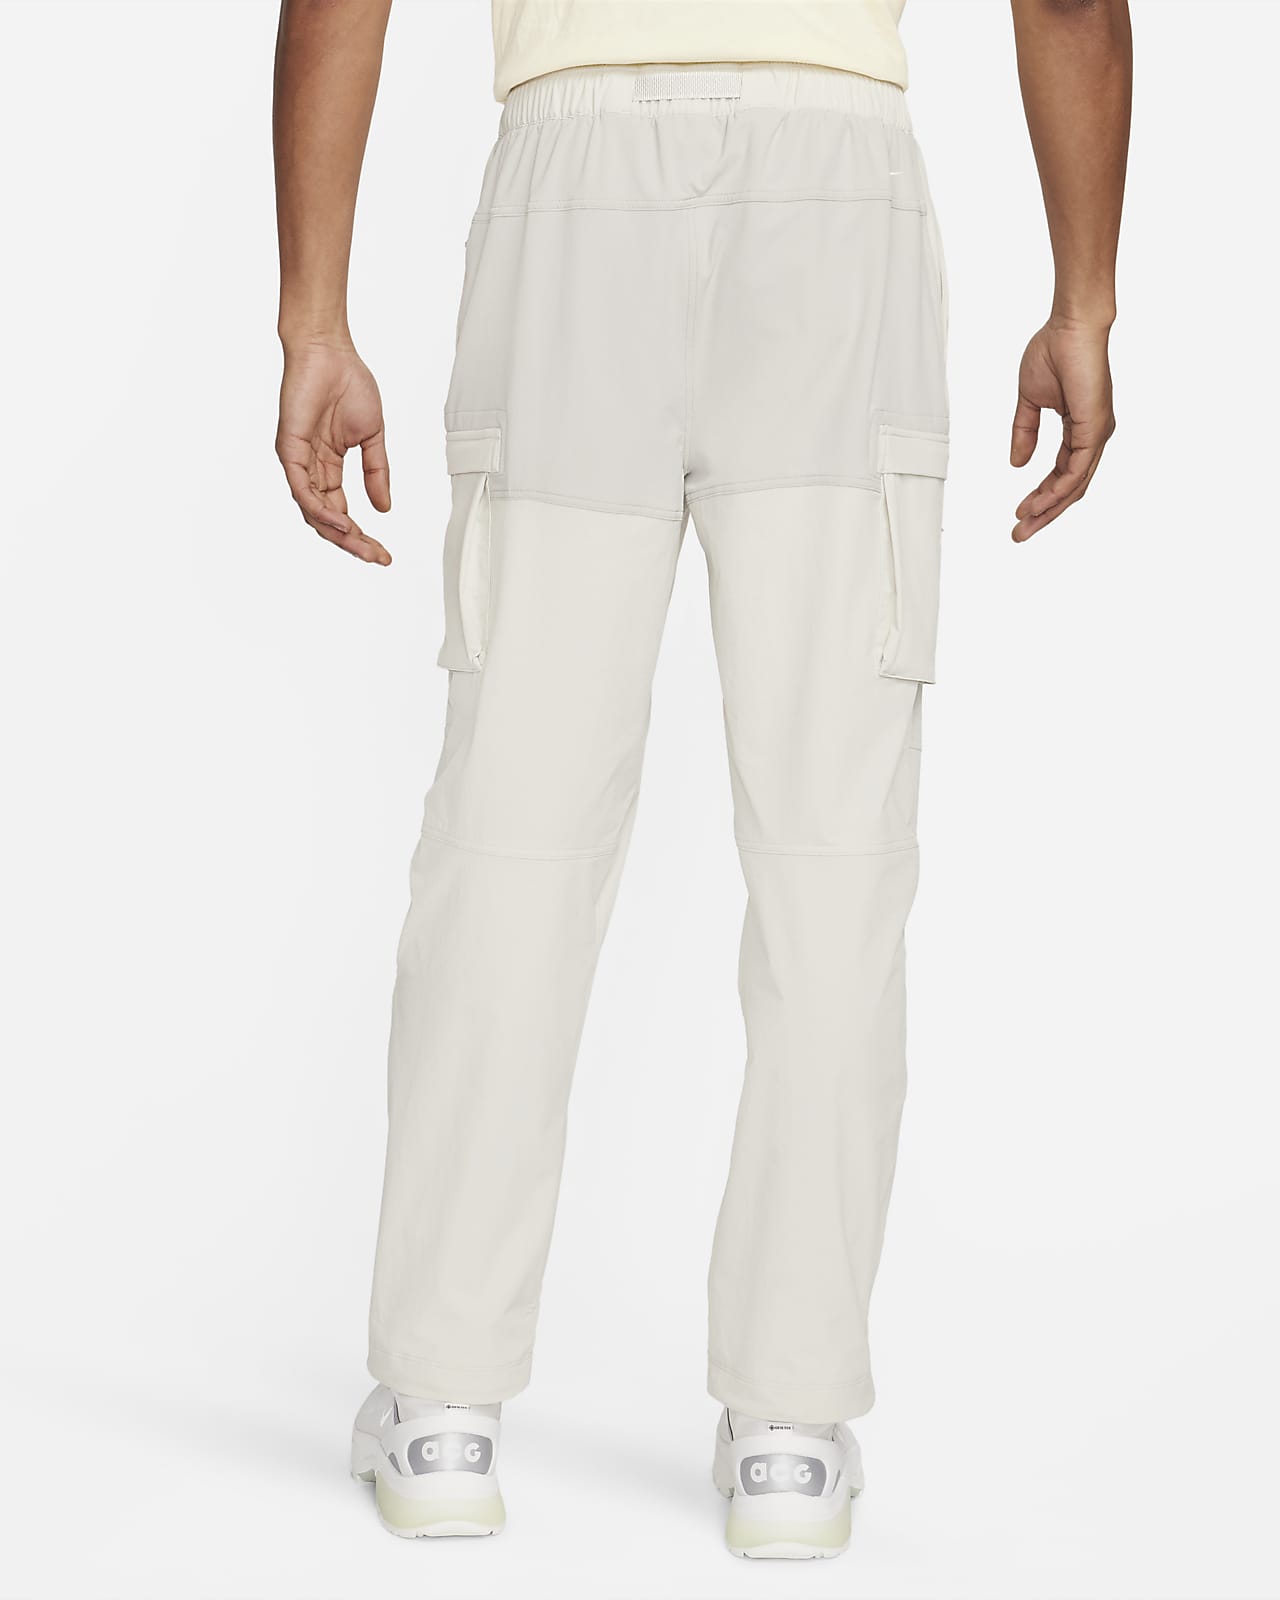 Nike Nike Life Men's Cargo Pants Brown | BSTN Store